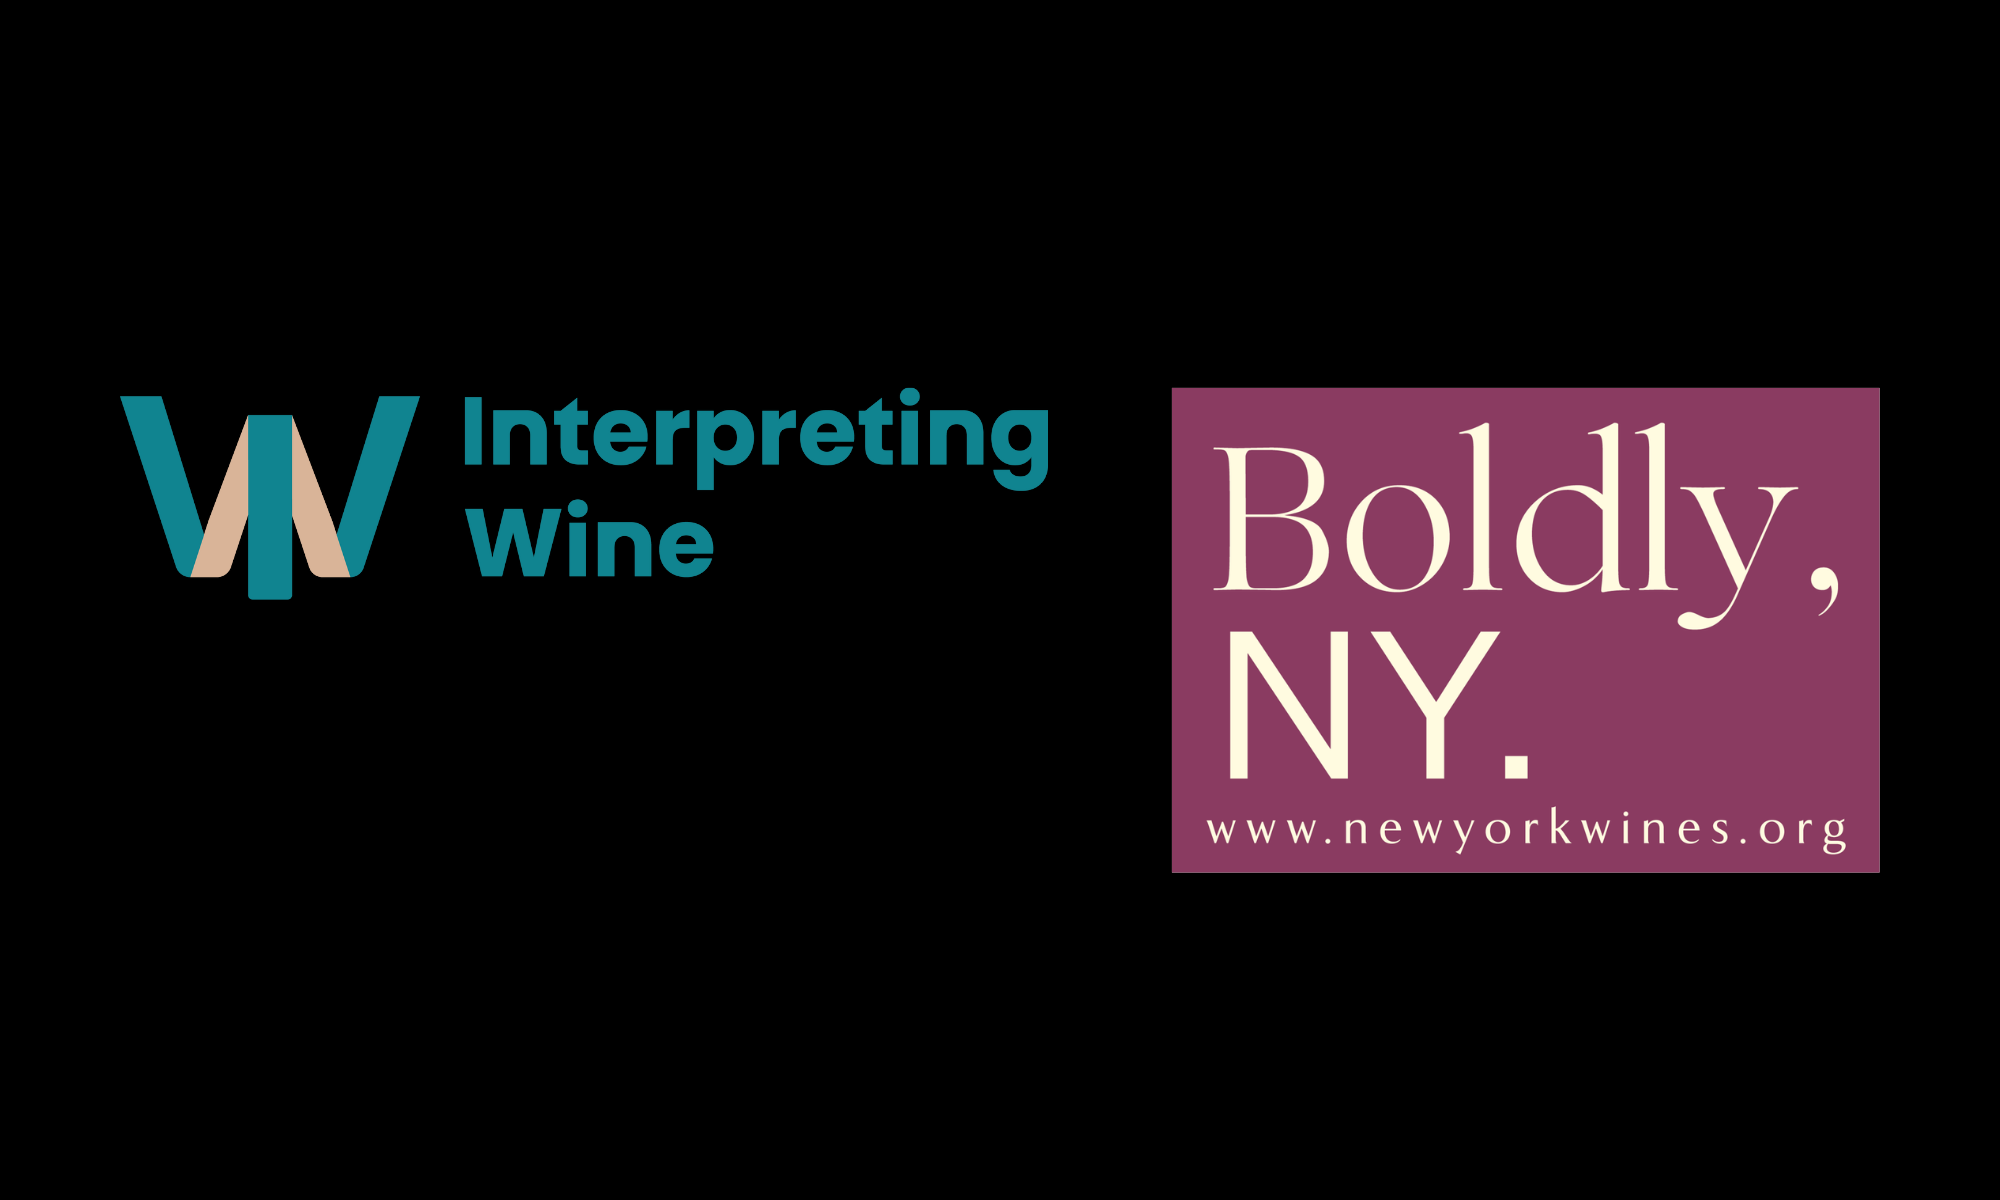 Interpreting Wine logo and Boldly NY logo of NYWGF